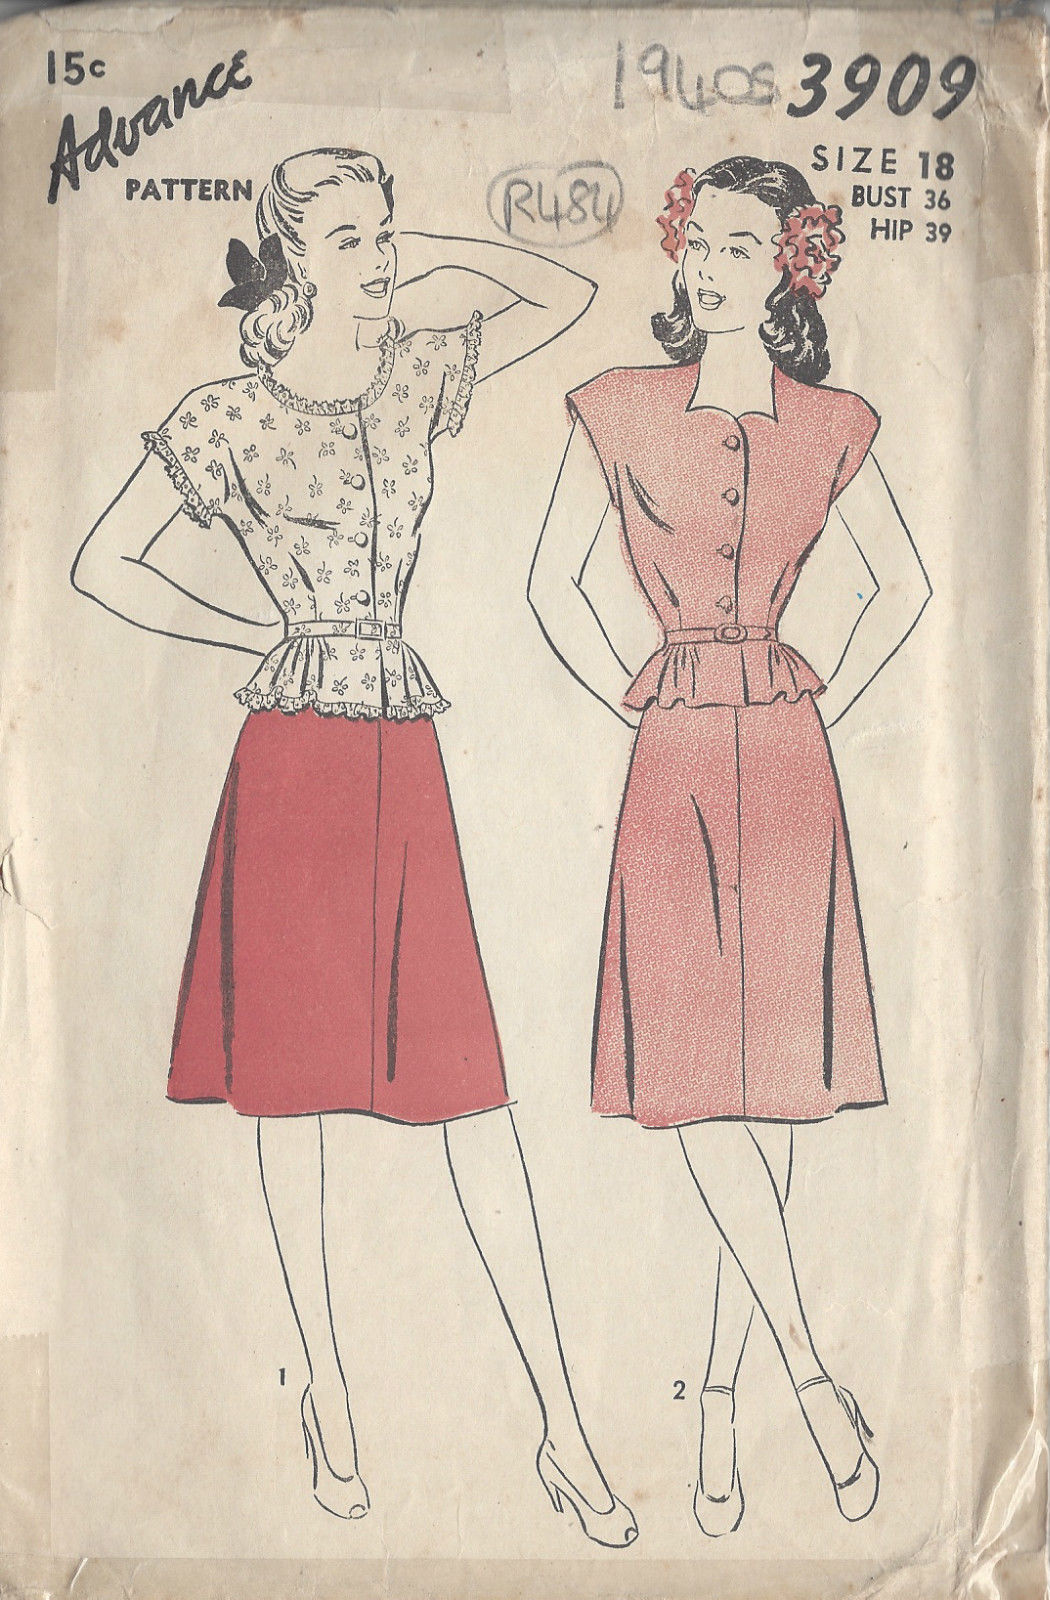 1944 Vintage Sewing Pattern B30;-W25 SUIT-TROUSERS & JACKET (105